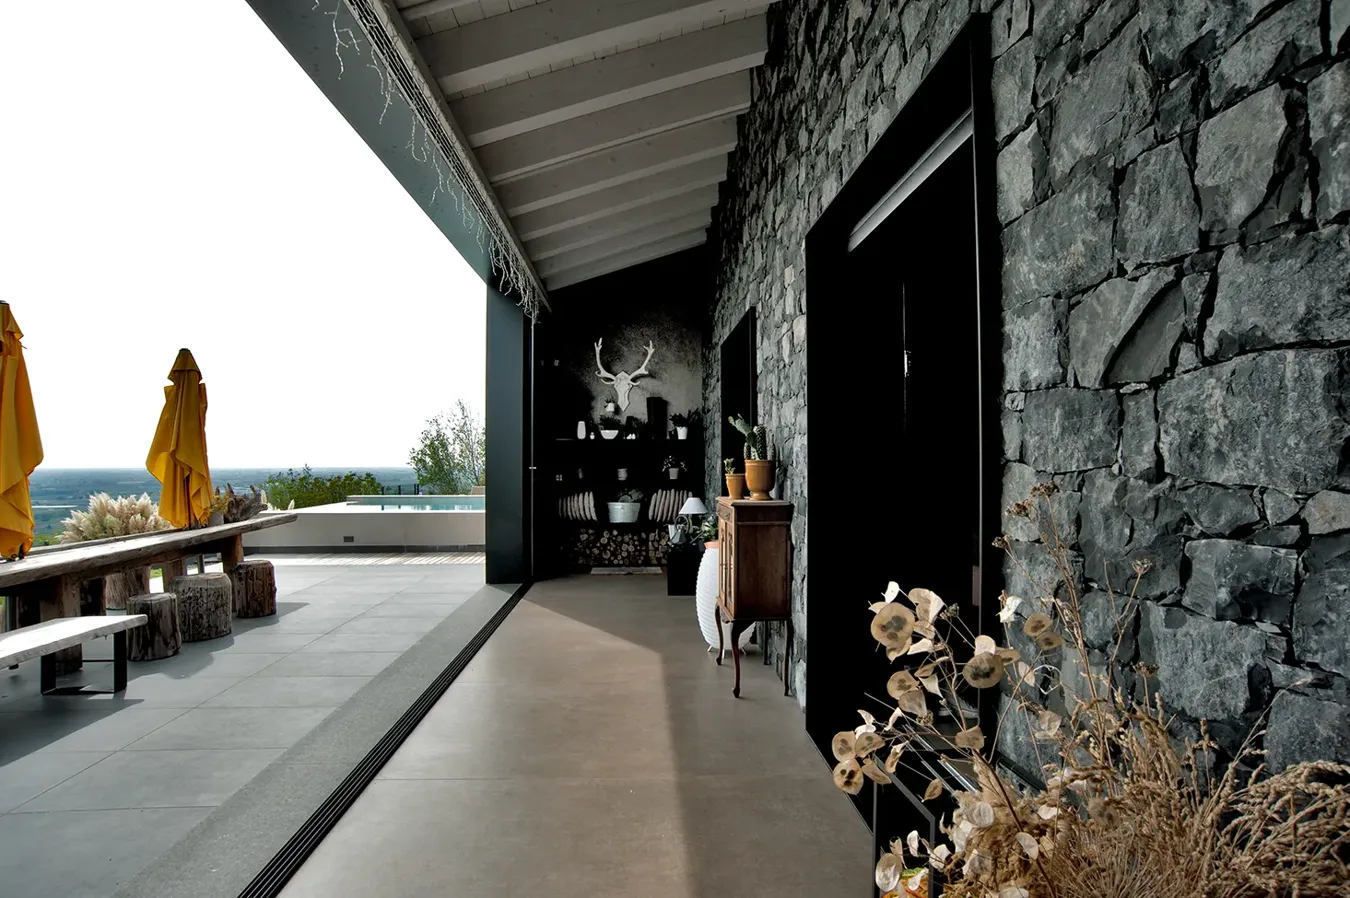 Элегантная терраса с плиткой под бетон цвета Ivory из коллекции Moov, каменная стена и вид на море.